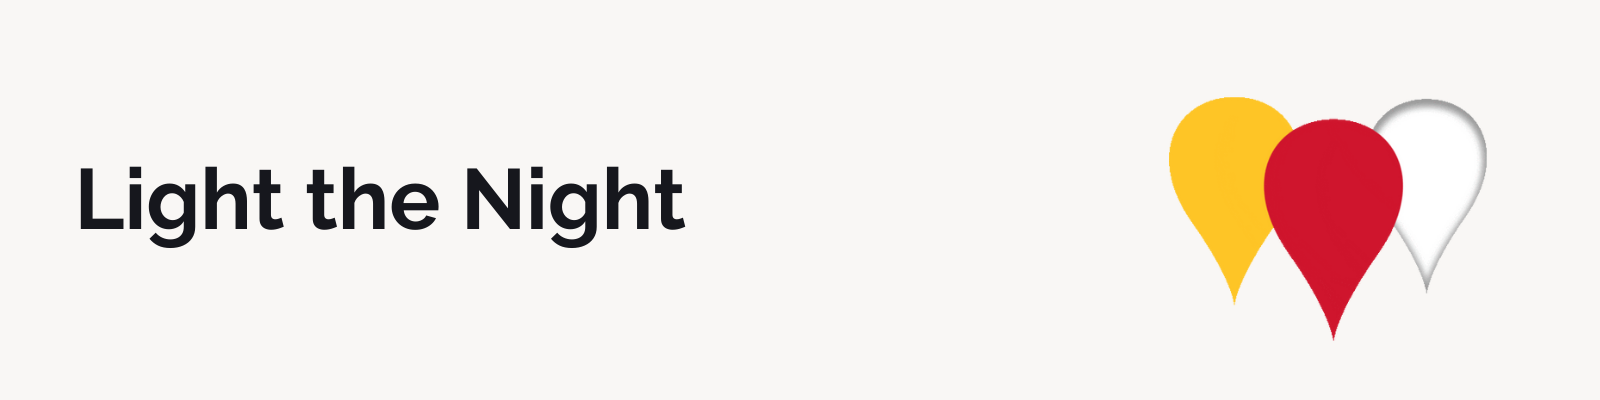 Cause marketing example - Light the Night